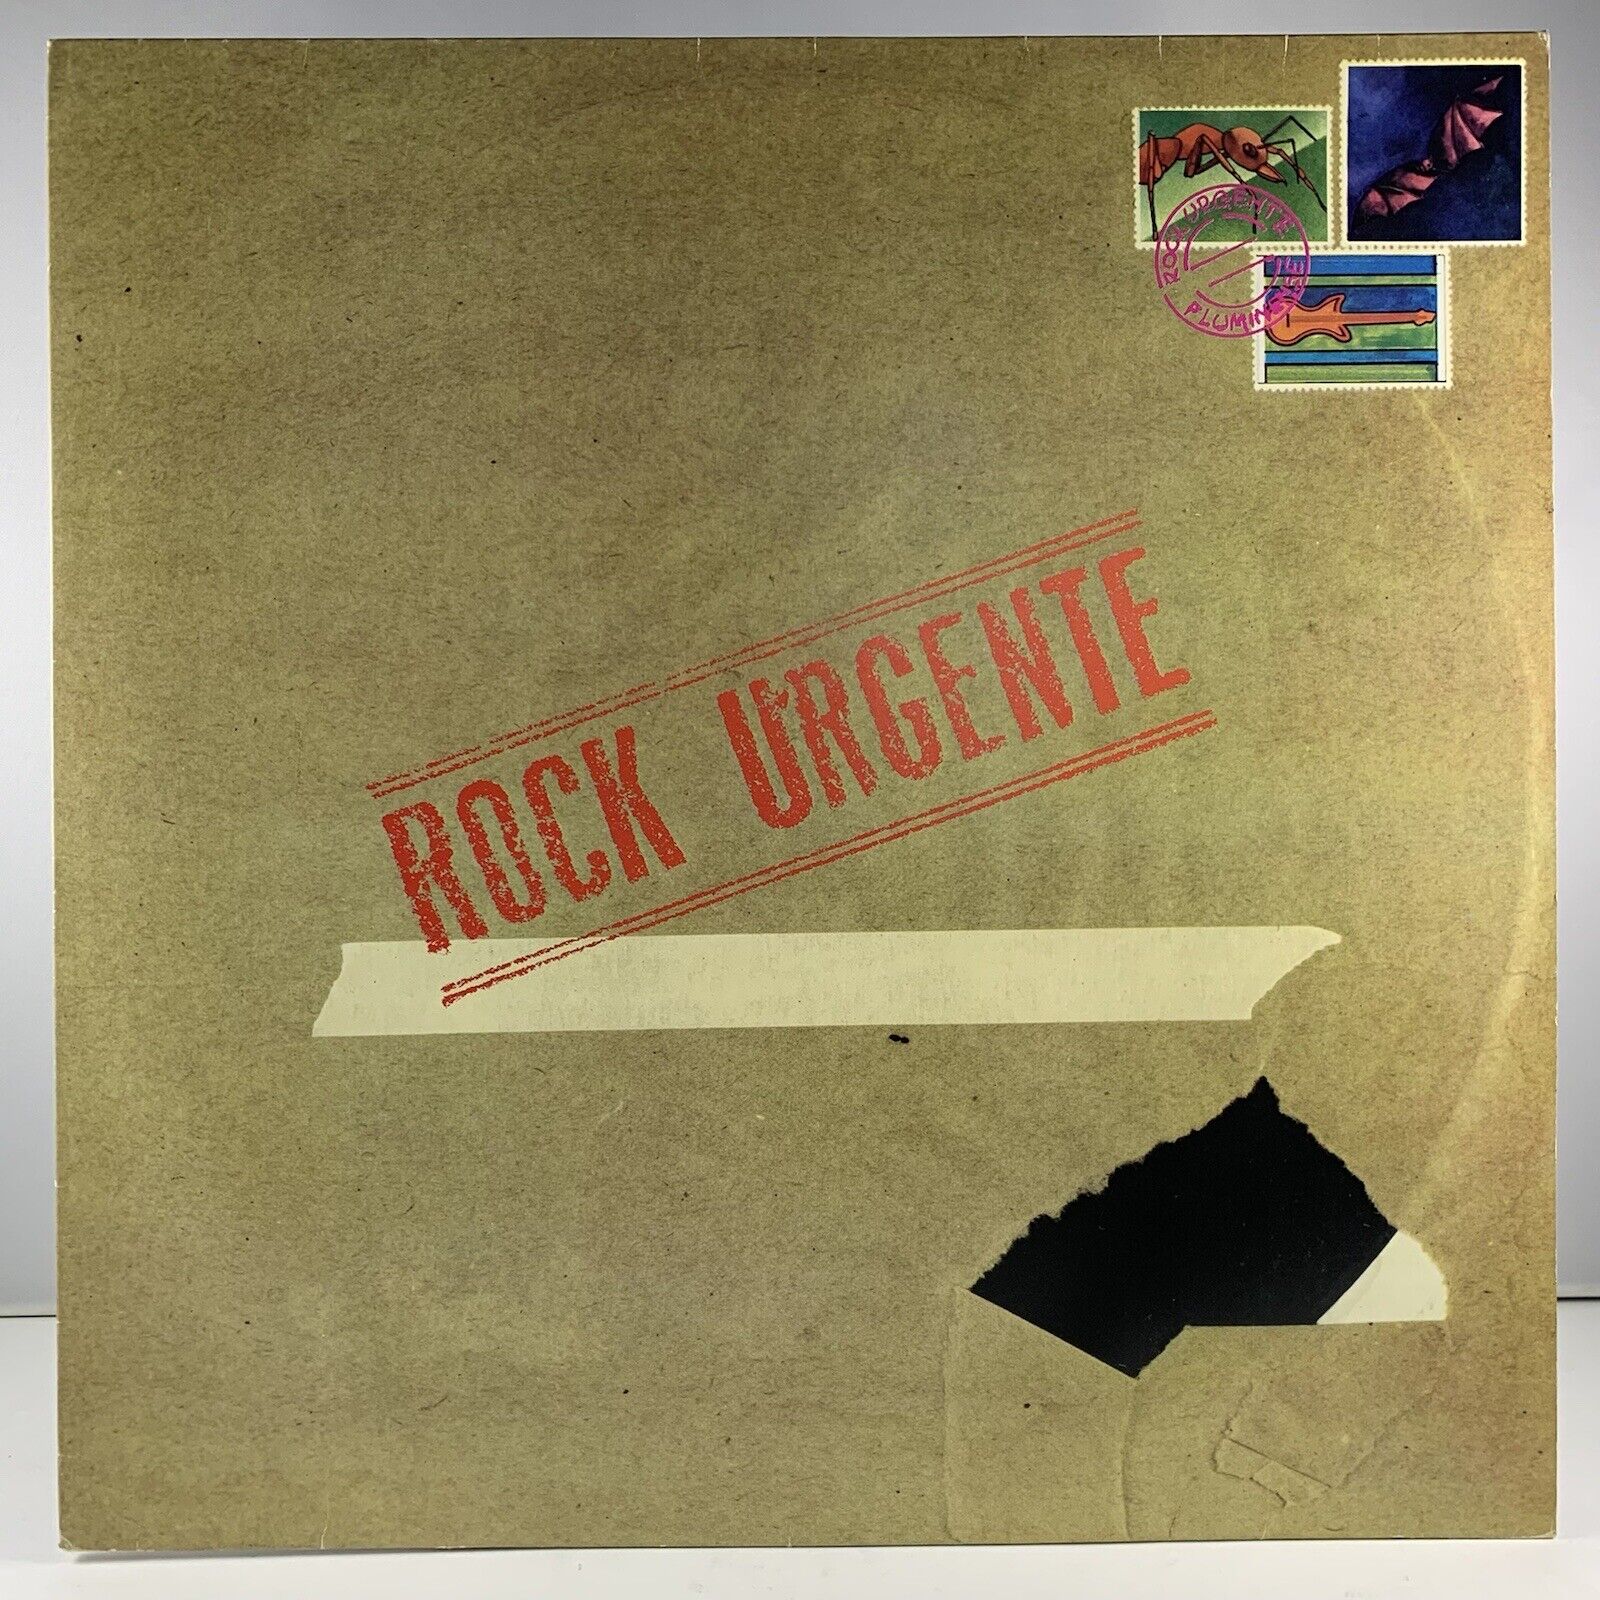 Rock Urgente Lp Vinyl Brazil Ozzy Osbourne The Clash Zappa Janis Compilation NM